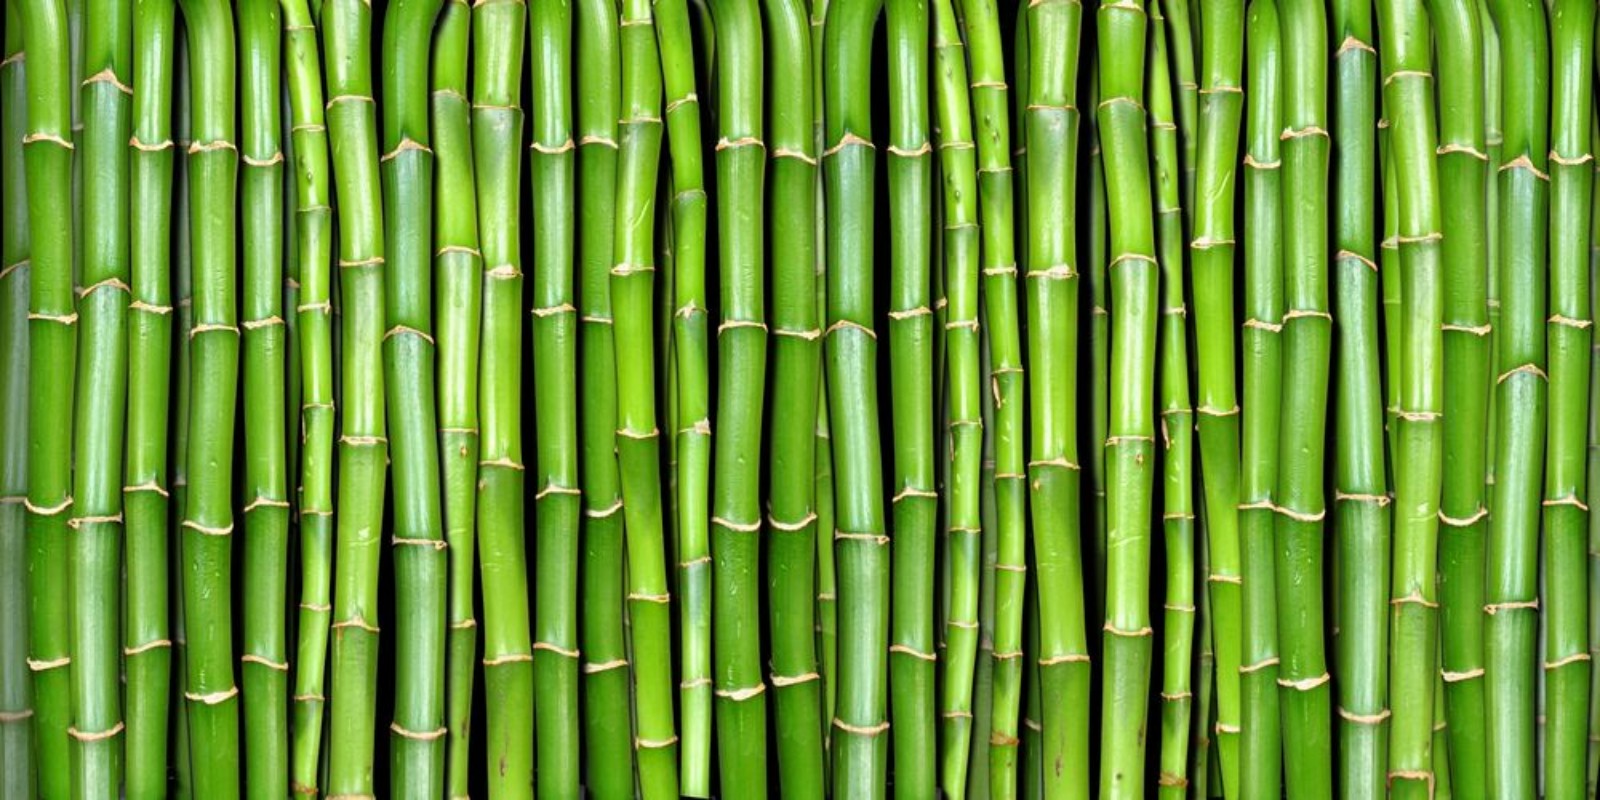 Image de Bamboo forest pattern II